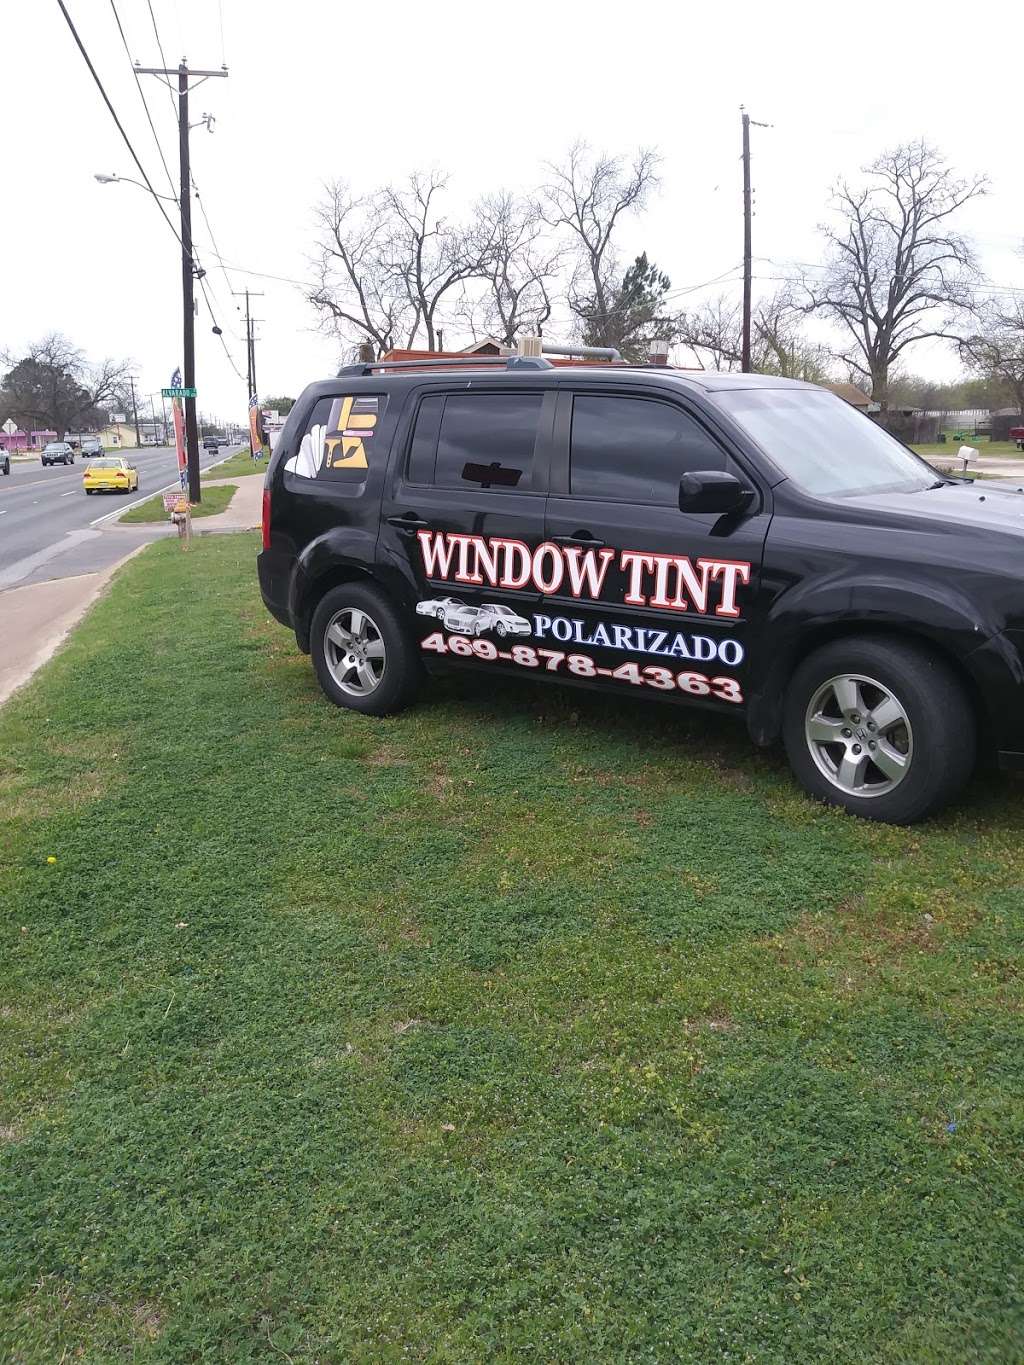 Window Tint Polarizado | 2802 Cartwright St Ste A, Dallas, TX 75212, USA | Phone: (469) 878-4363